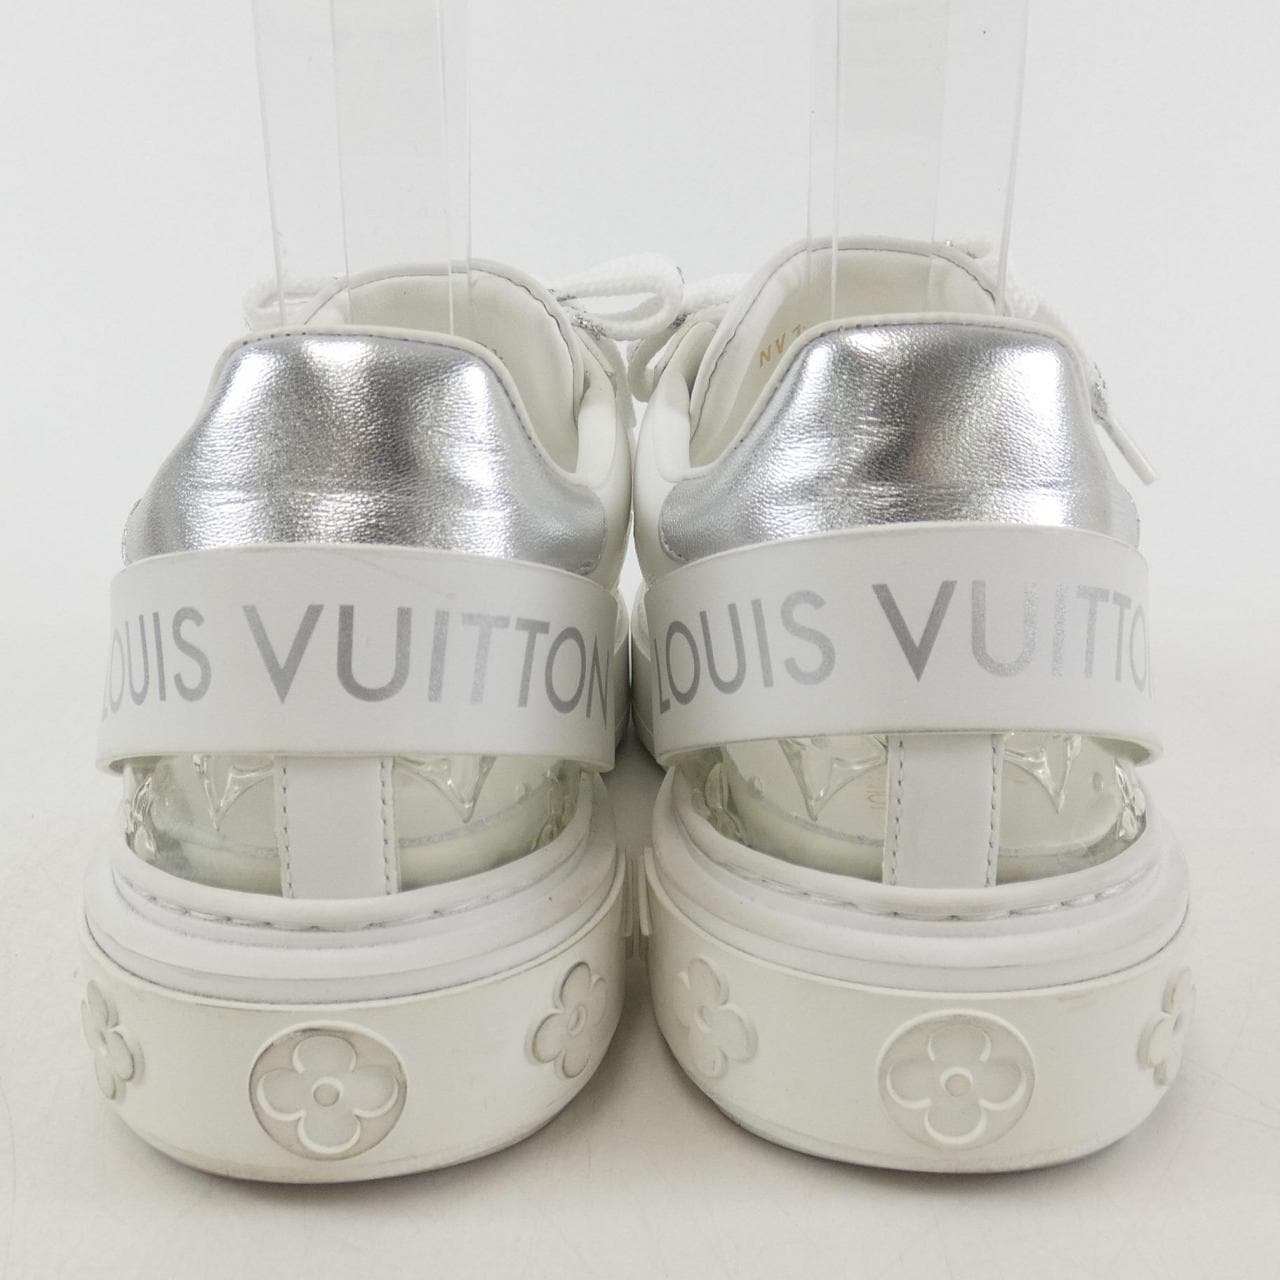 LOUIS LOUIS VUITTON sneakers